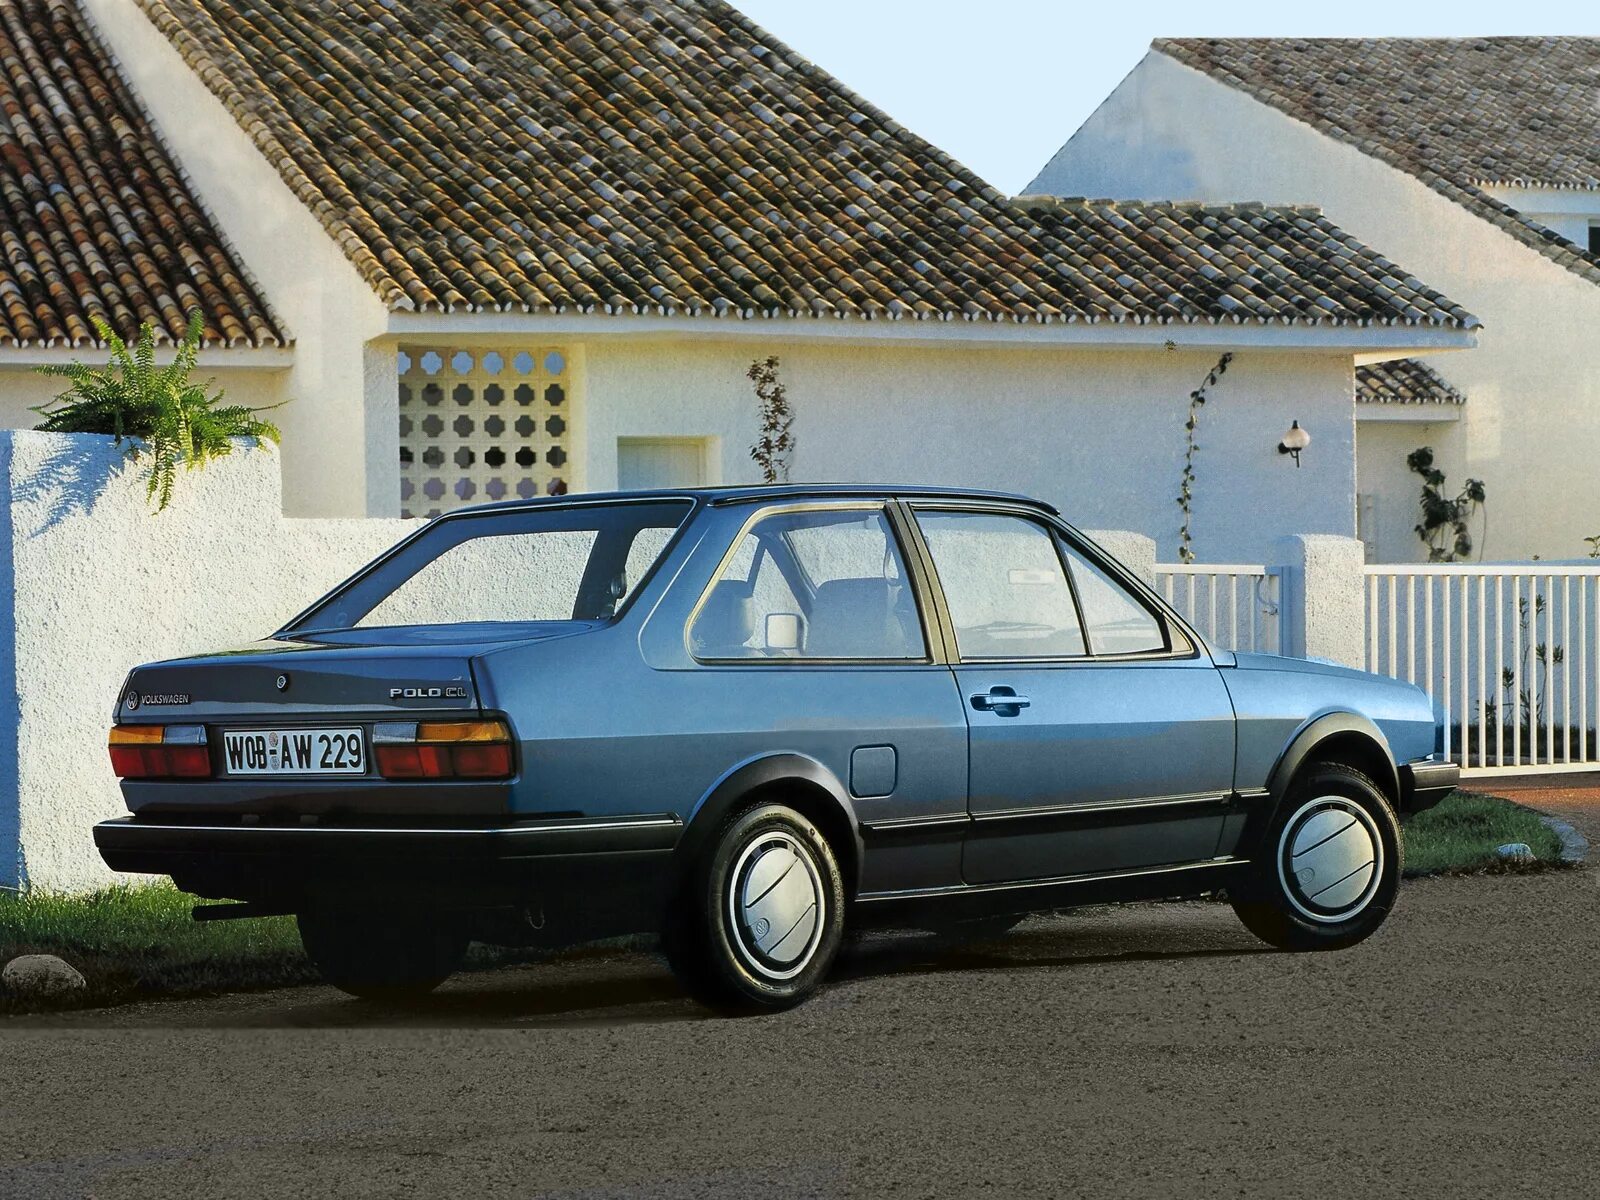 Vw polo 2. Volkswagen Polo 2 Coupe. VW Polo mk2. Volkswagen 1981. Volkswagen Polo 2 купе.